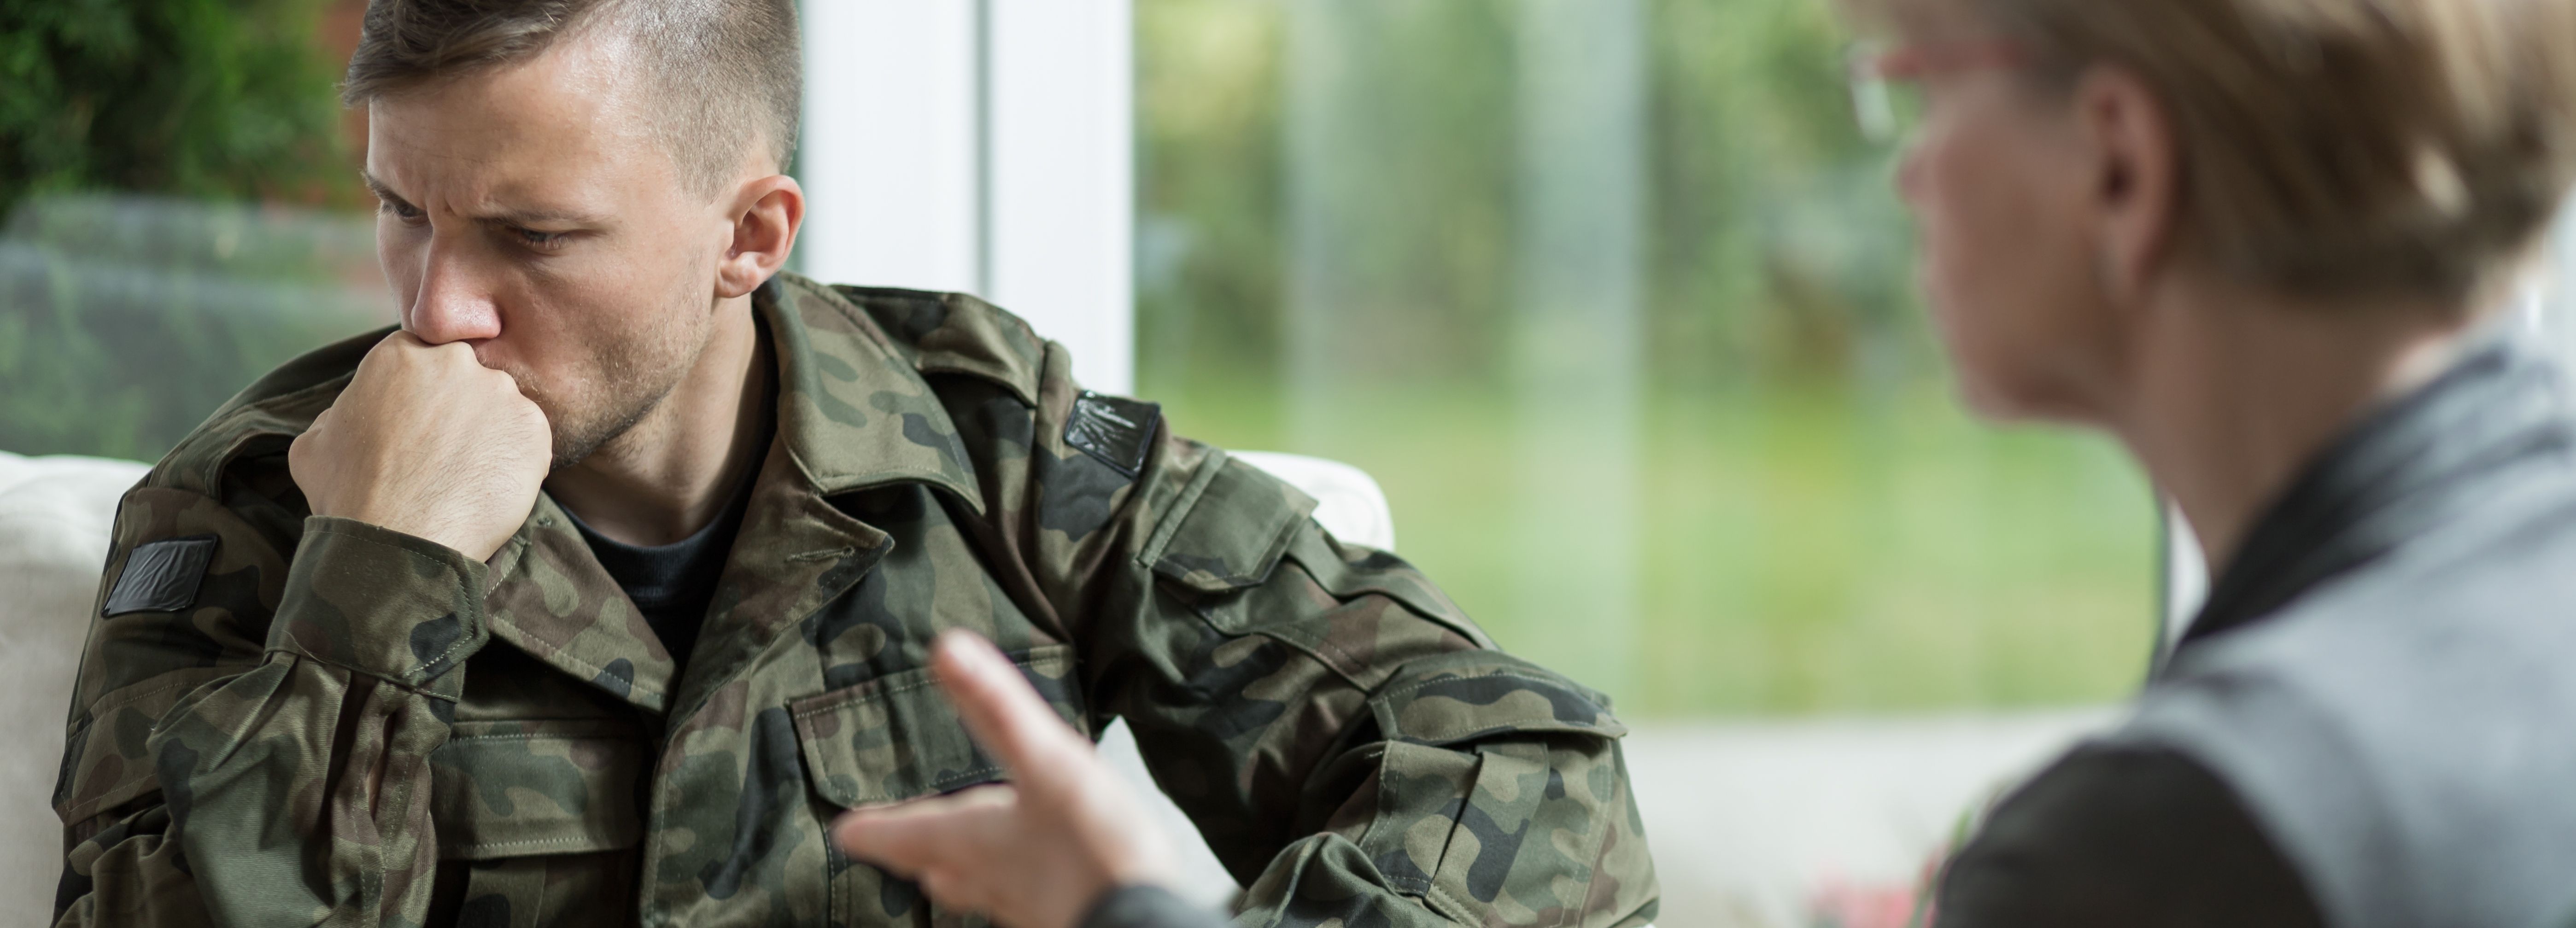 military serviceman contemplating divorce